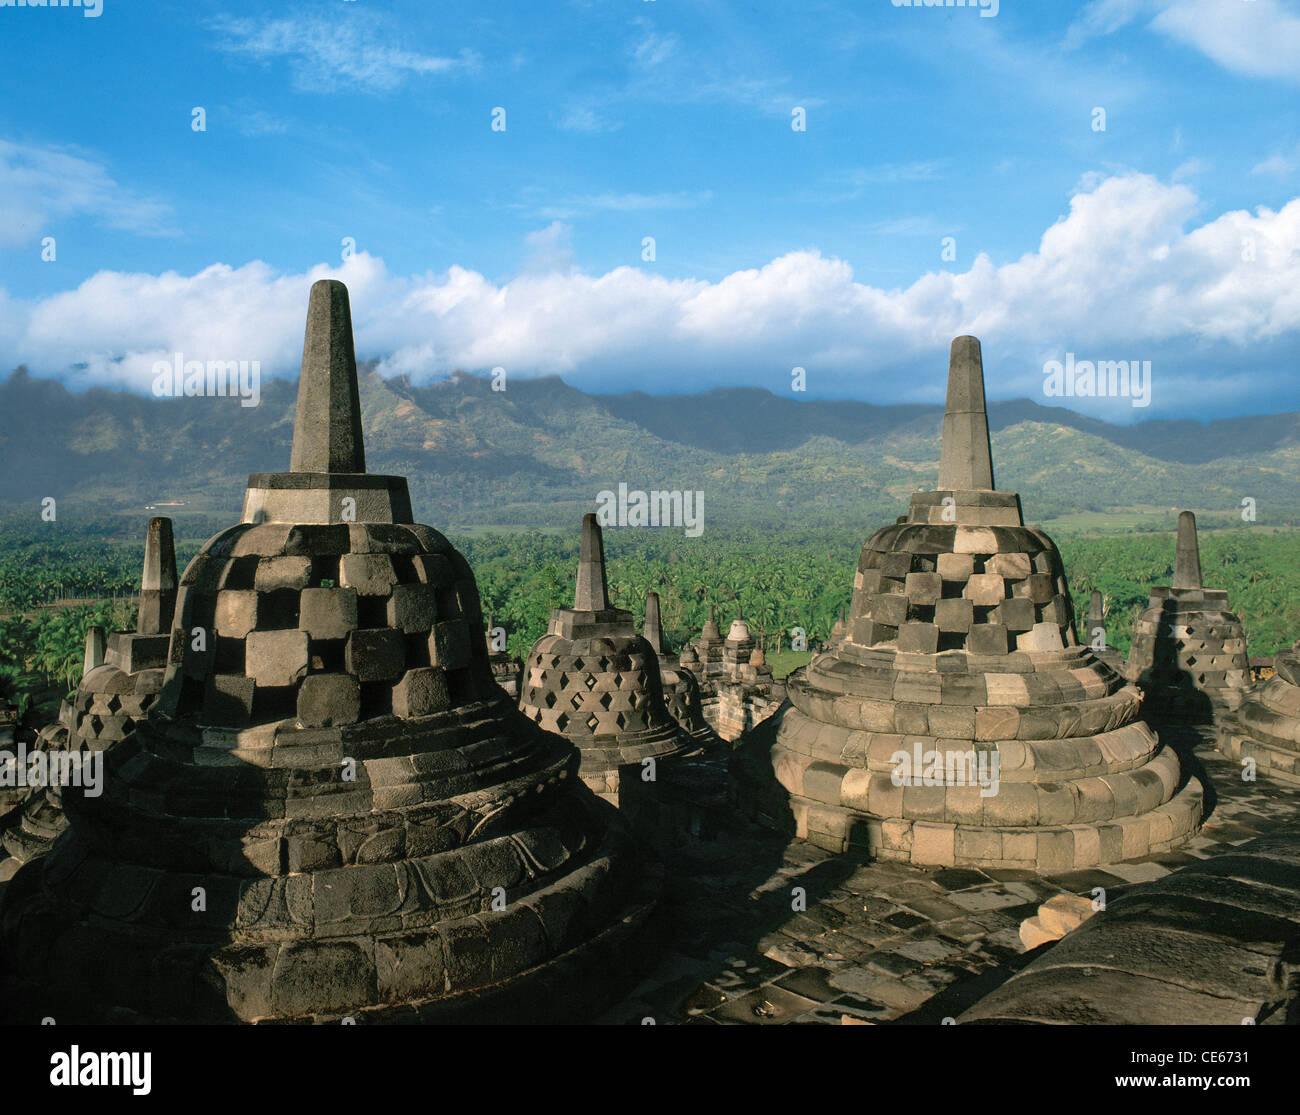 Indonesia. Central Java. Magelang. Borobudur. 9th-century Mahayana Buddhist monument. Stupas overlooking a mountain. Stock Photo